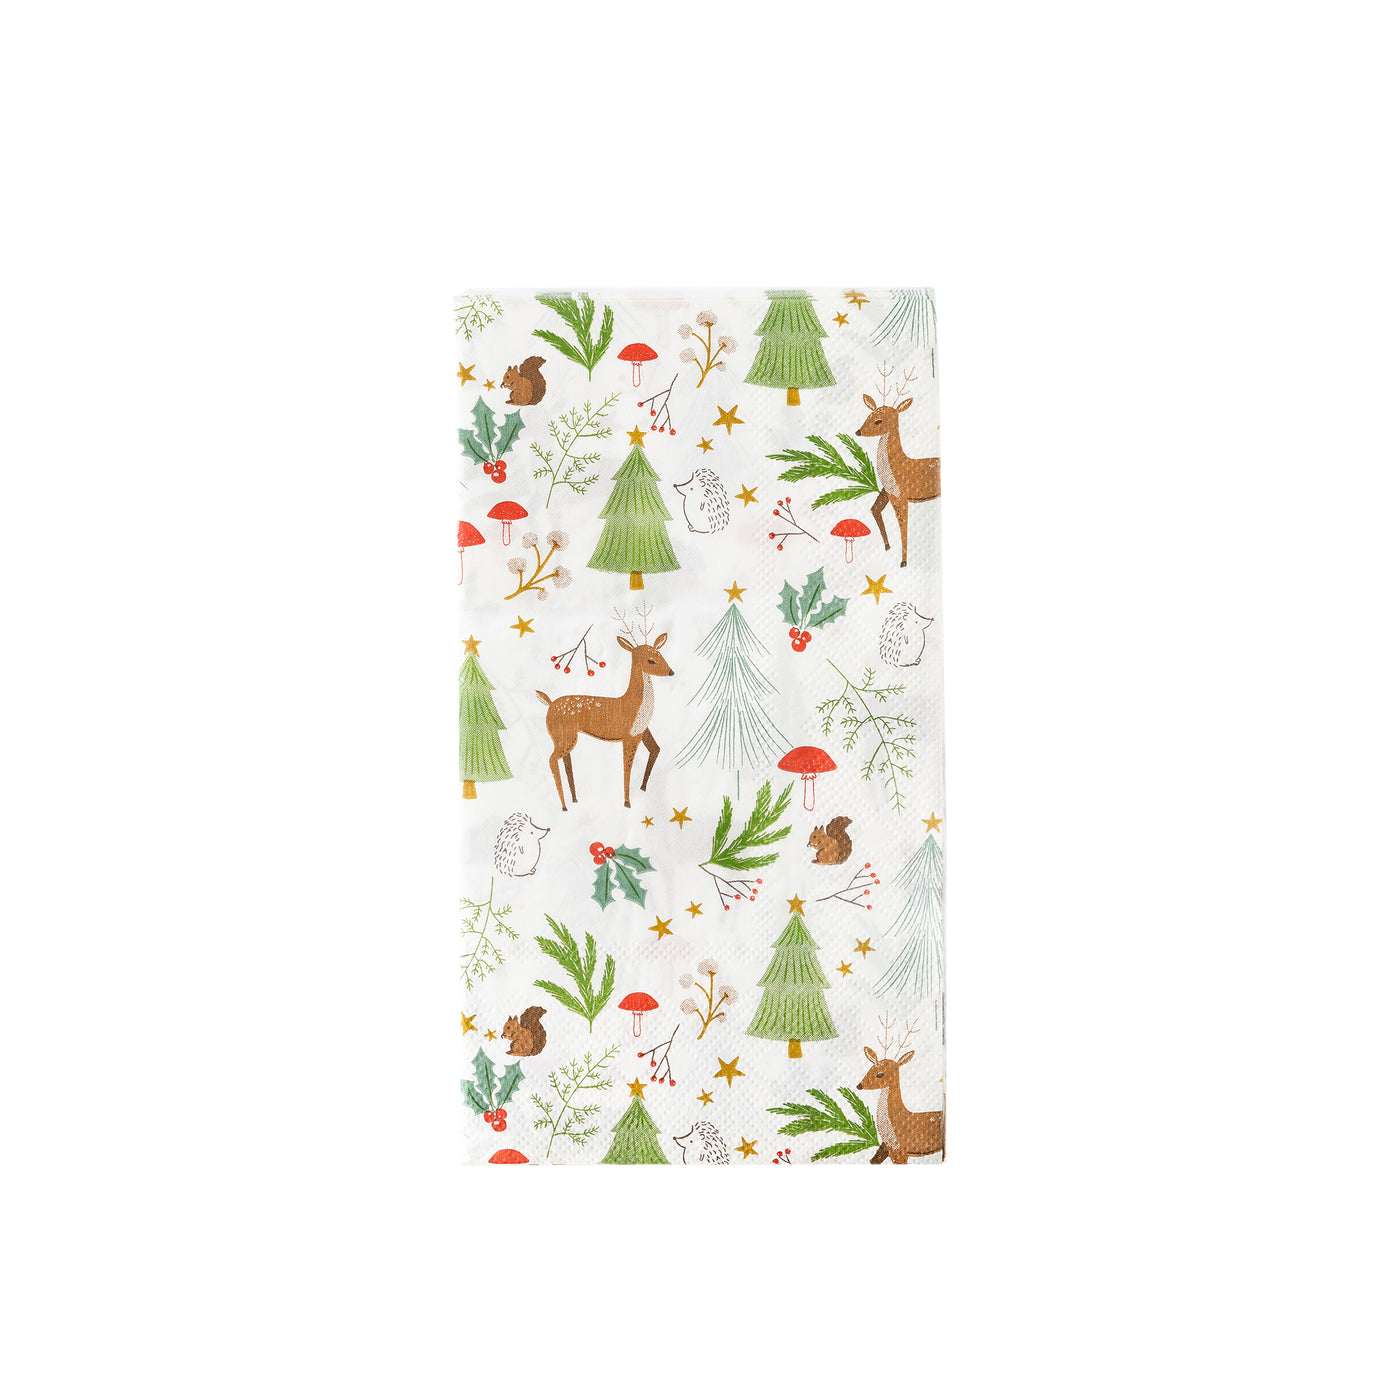 PLTS394Q - Christmas Forest Paper Dinner Napkin